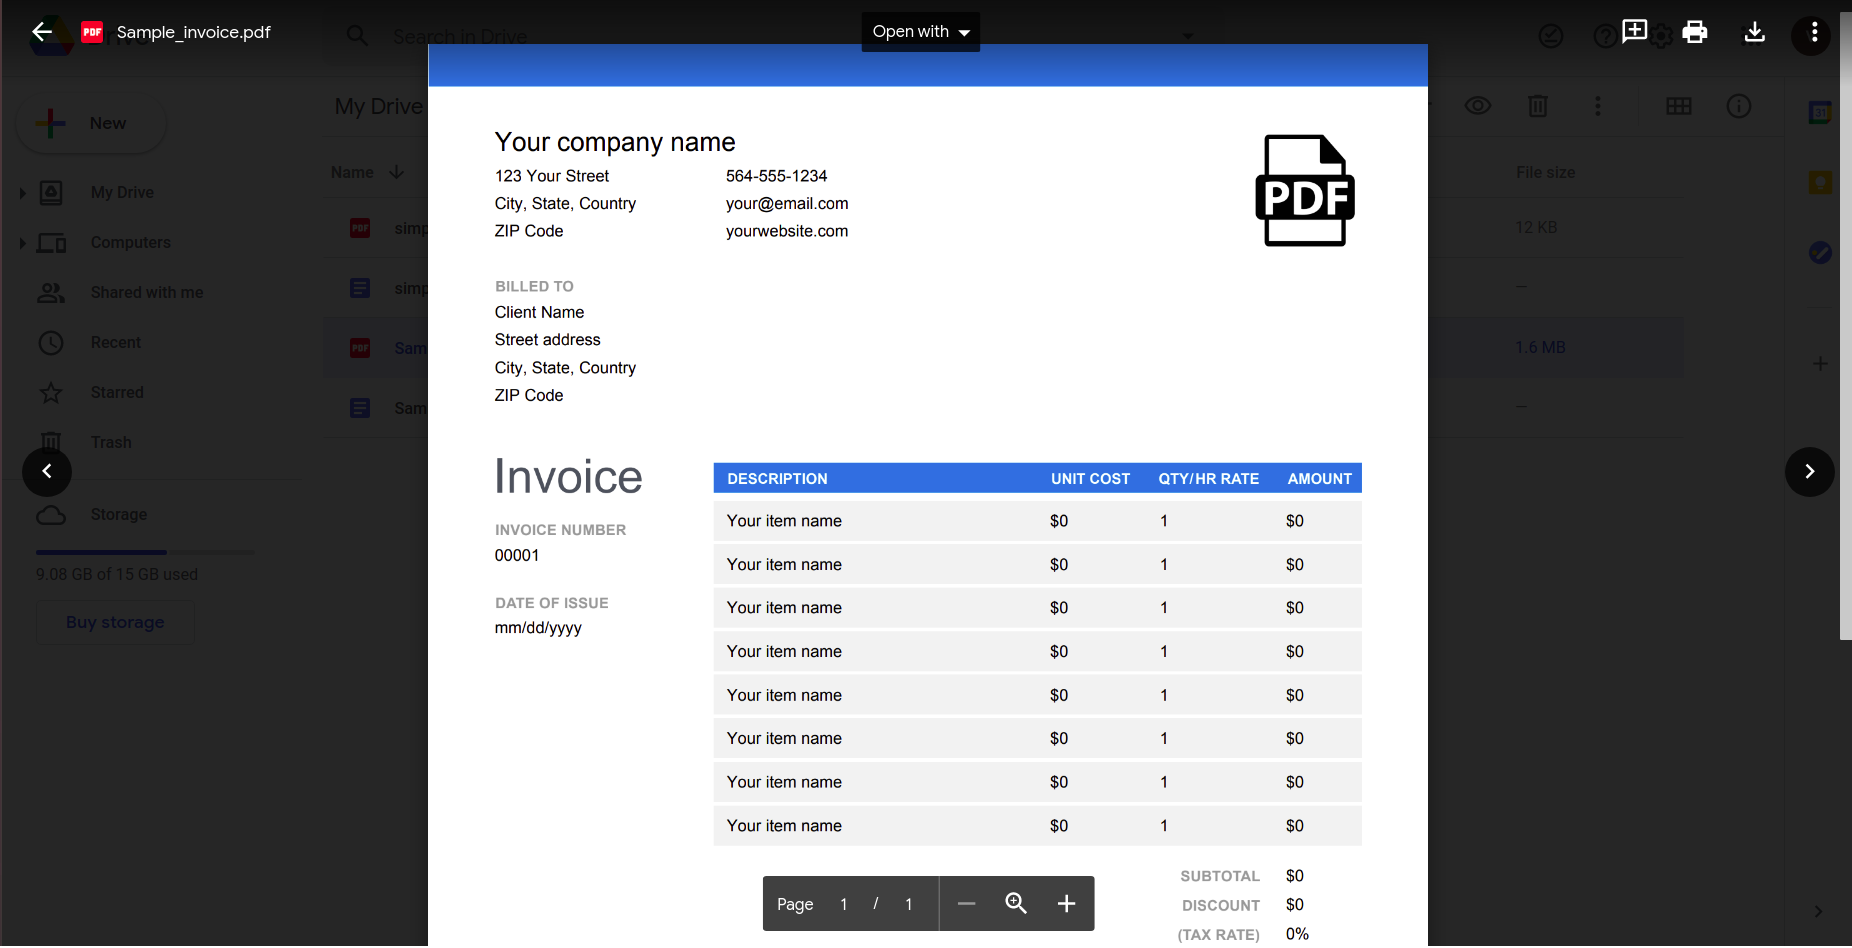 Sample_invoice_drivemethod